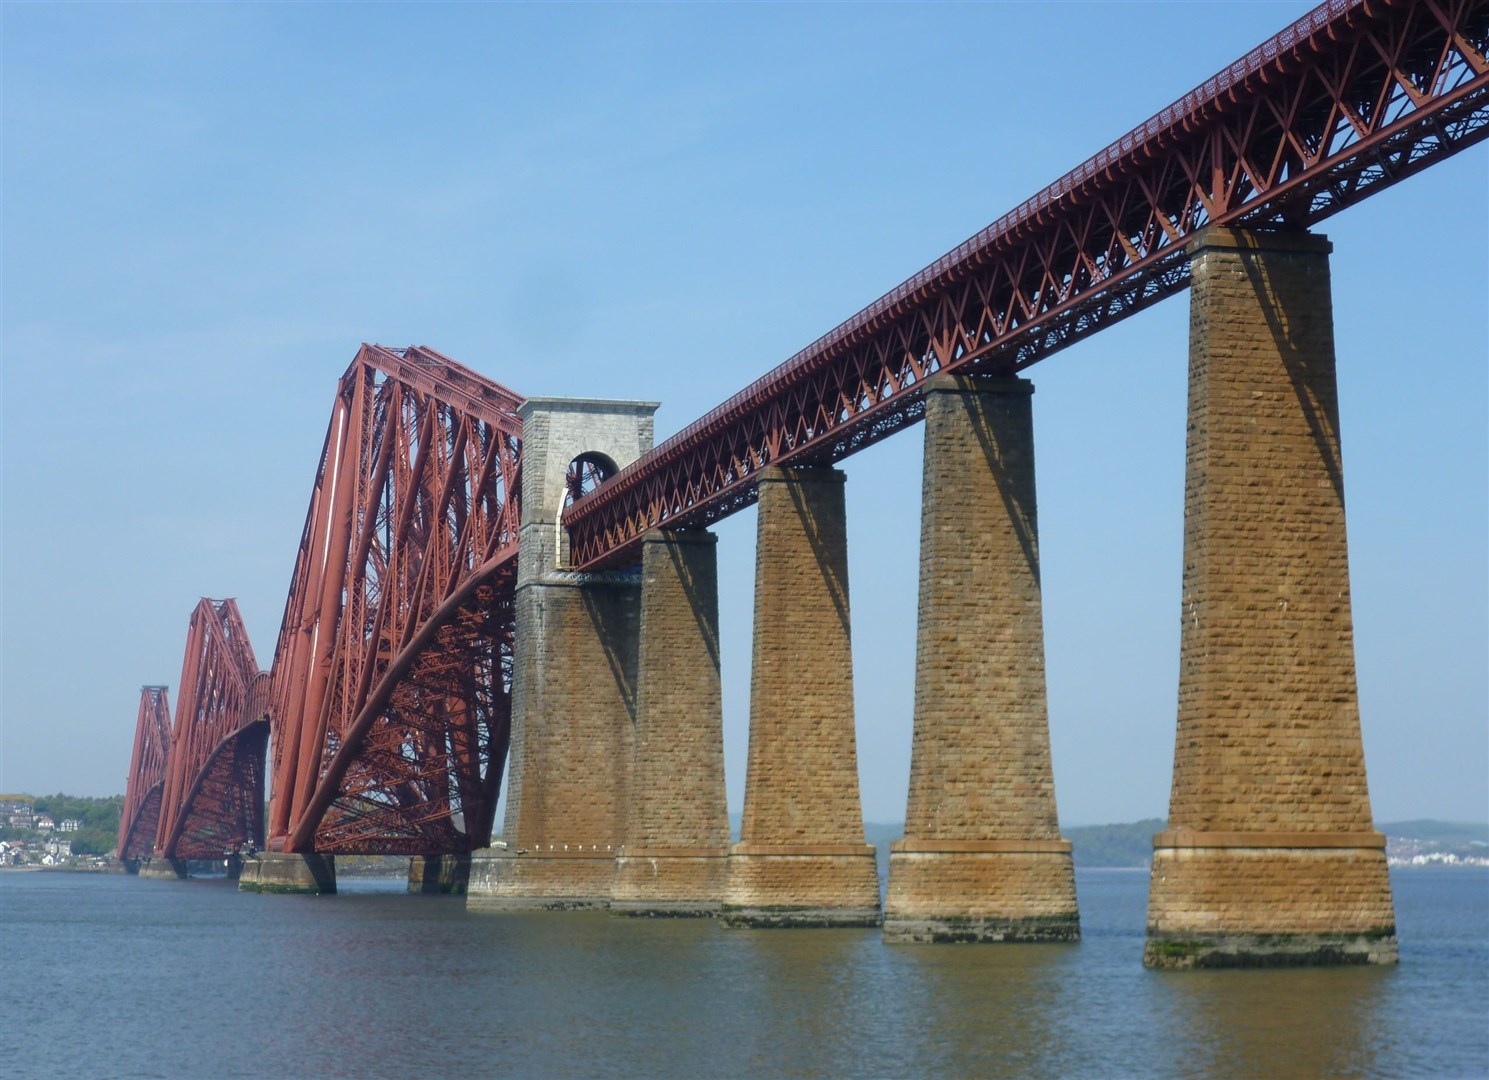 The 165ft-high Firth of Forth Rail Bridge